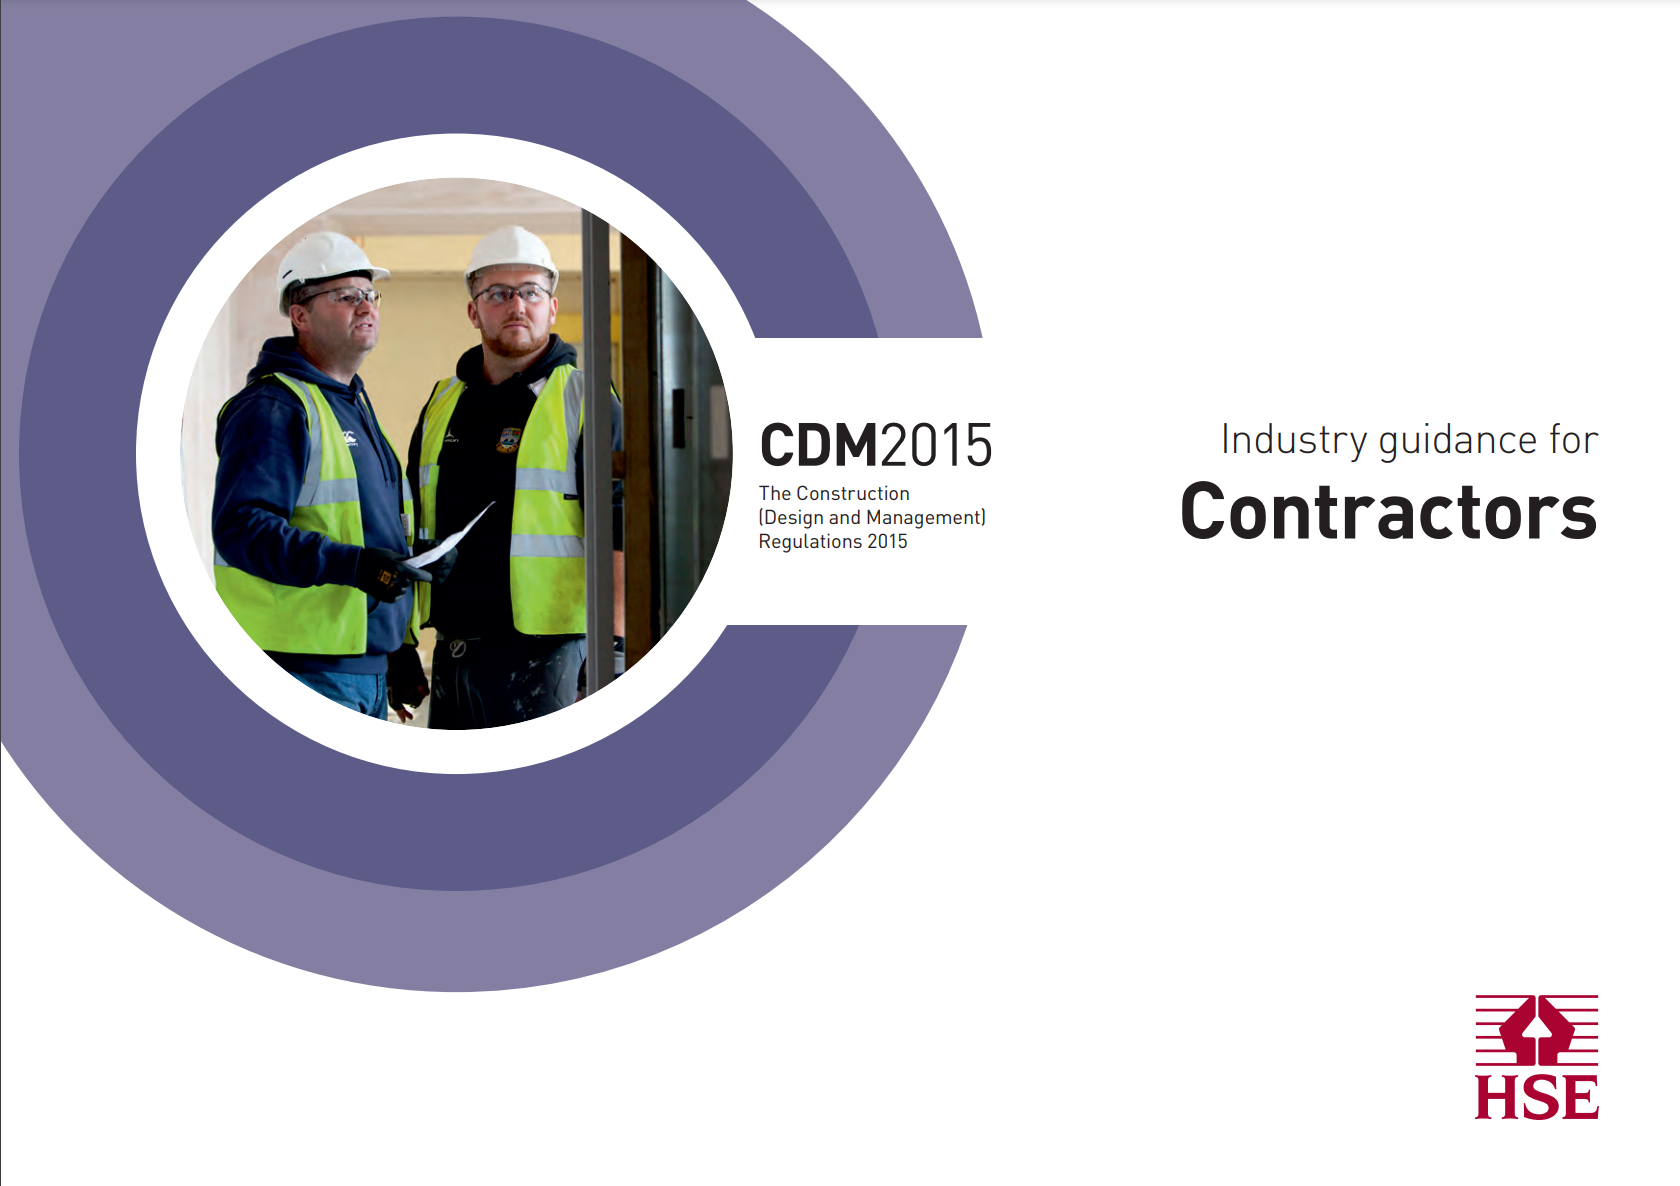 CDM2015-Industry guidance for Contractors